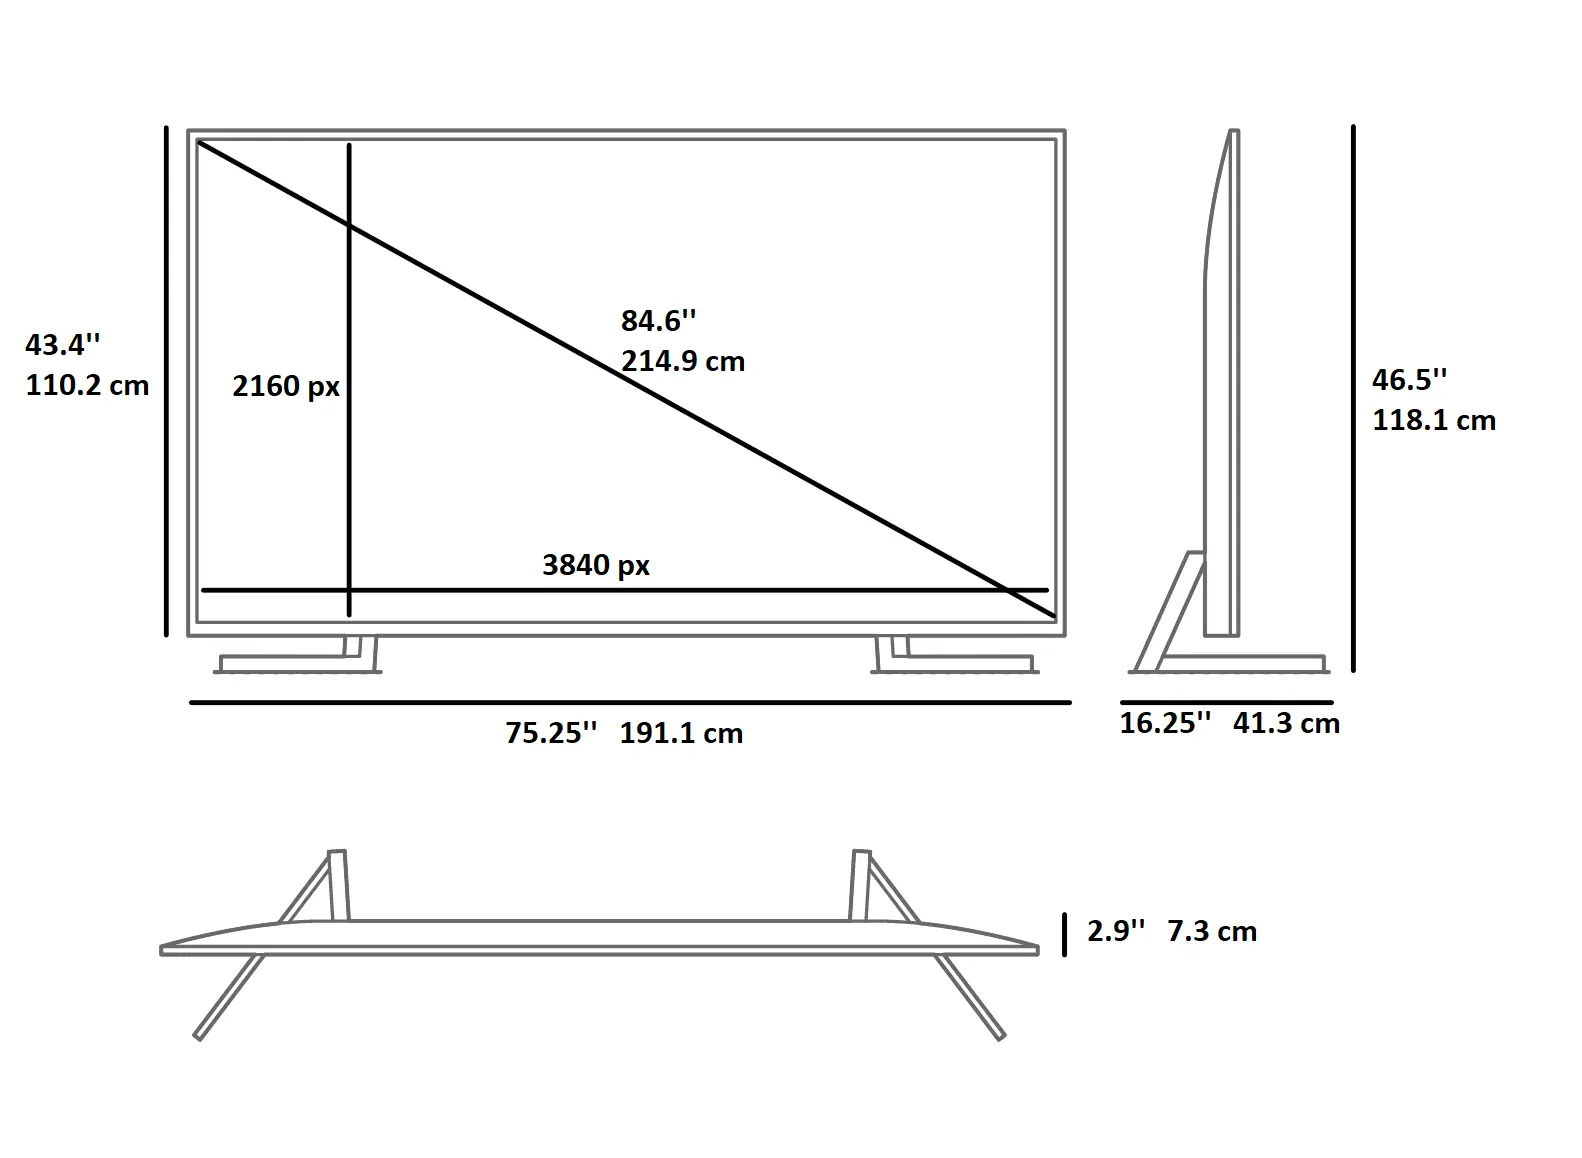 Alfabet boble Duplikere 85 inch TV dimensions - TV Specs